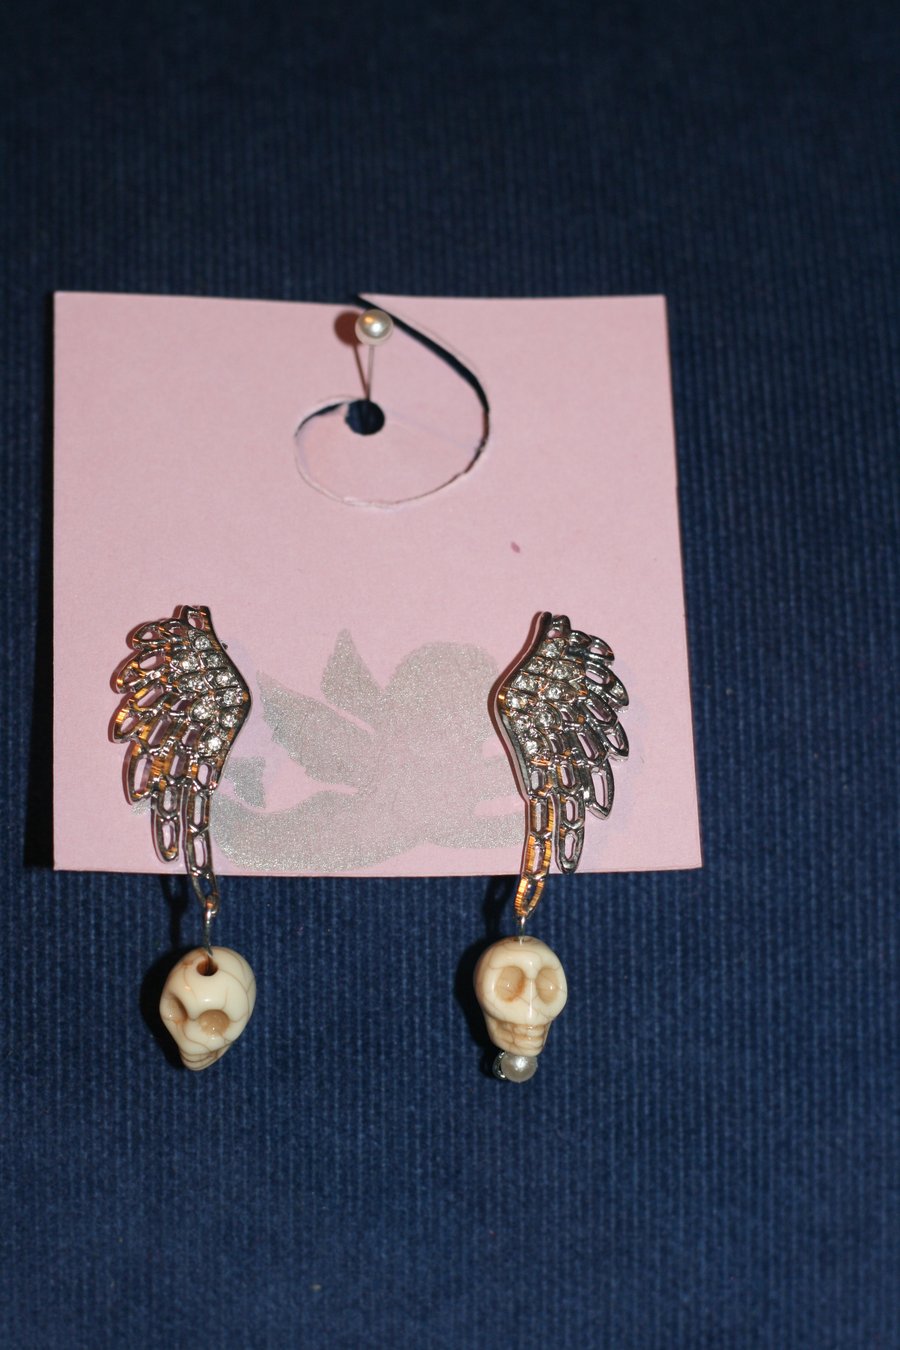 Wing and skull earrings